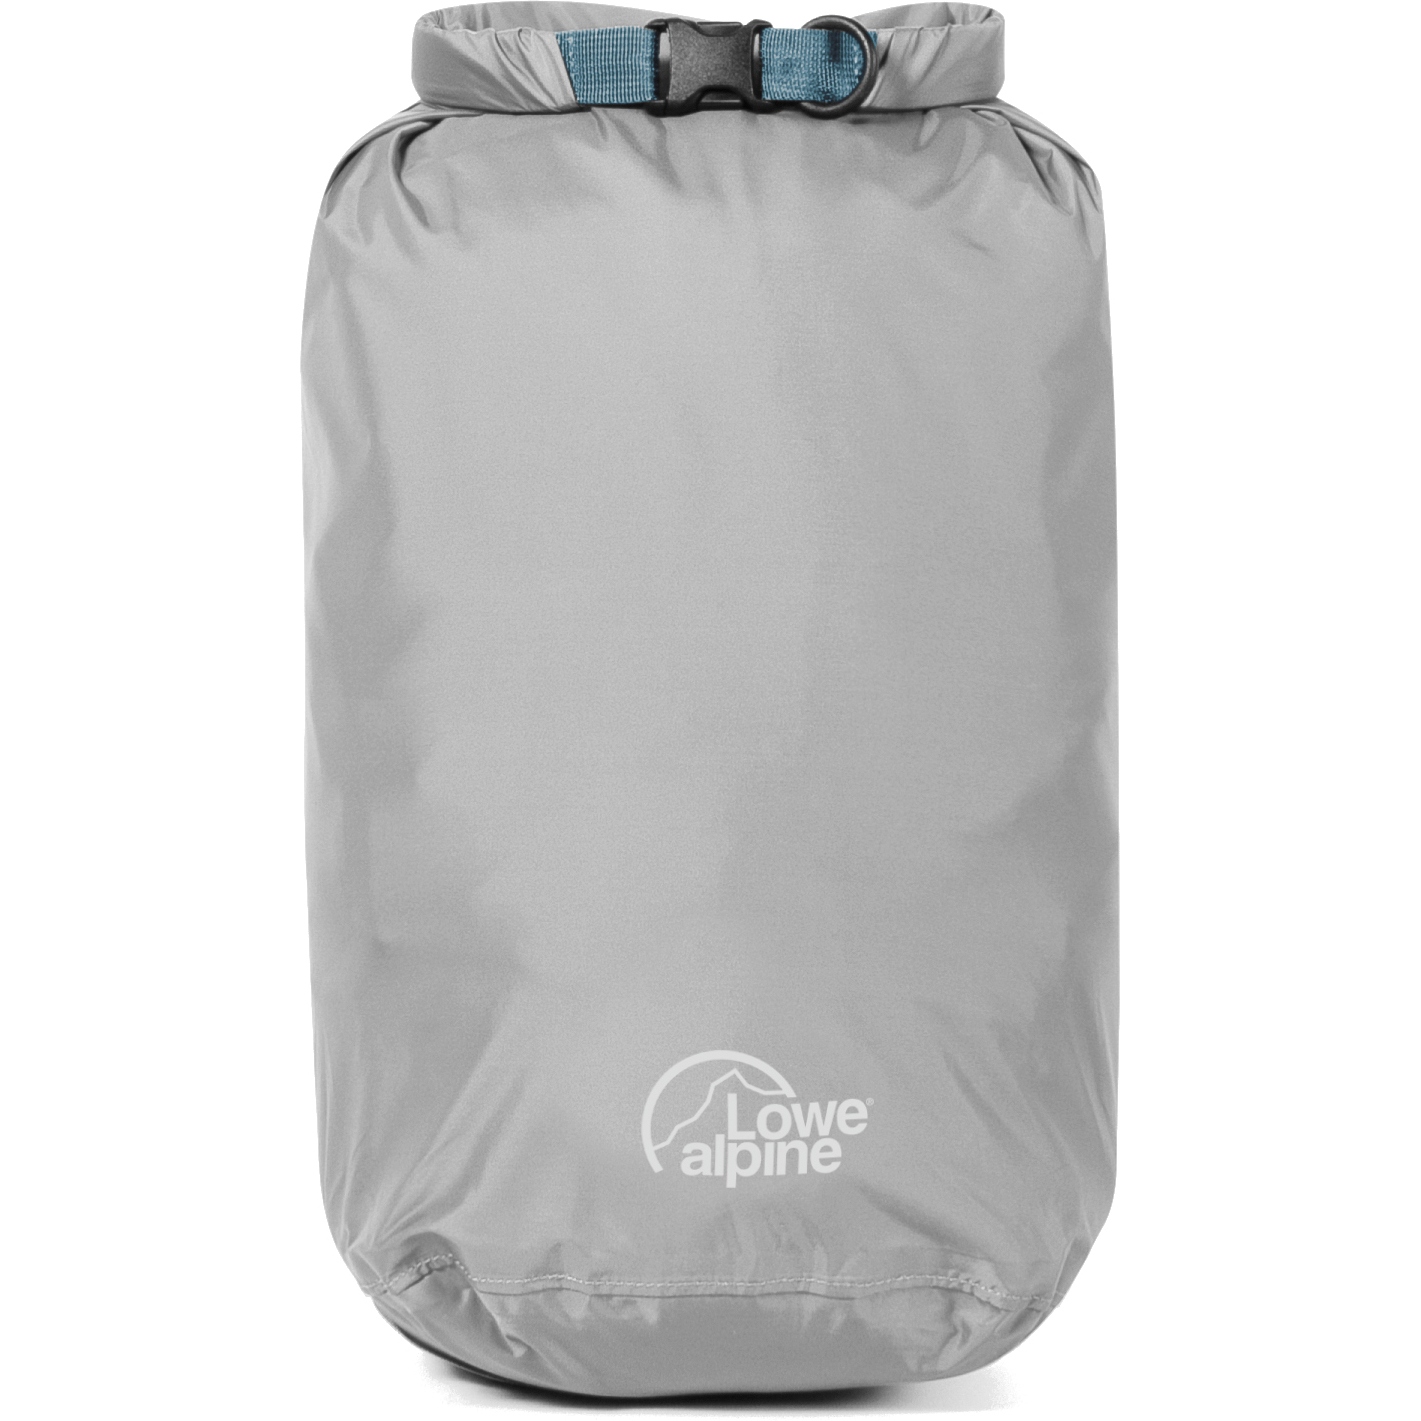 Productfoto van Lowe Alpine Ultralite - Dry Bag - 10L